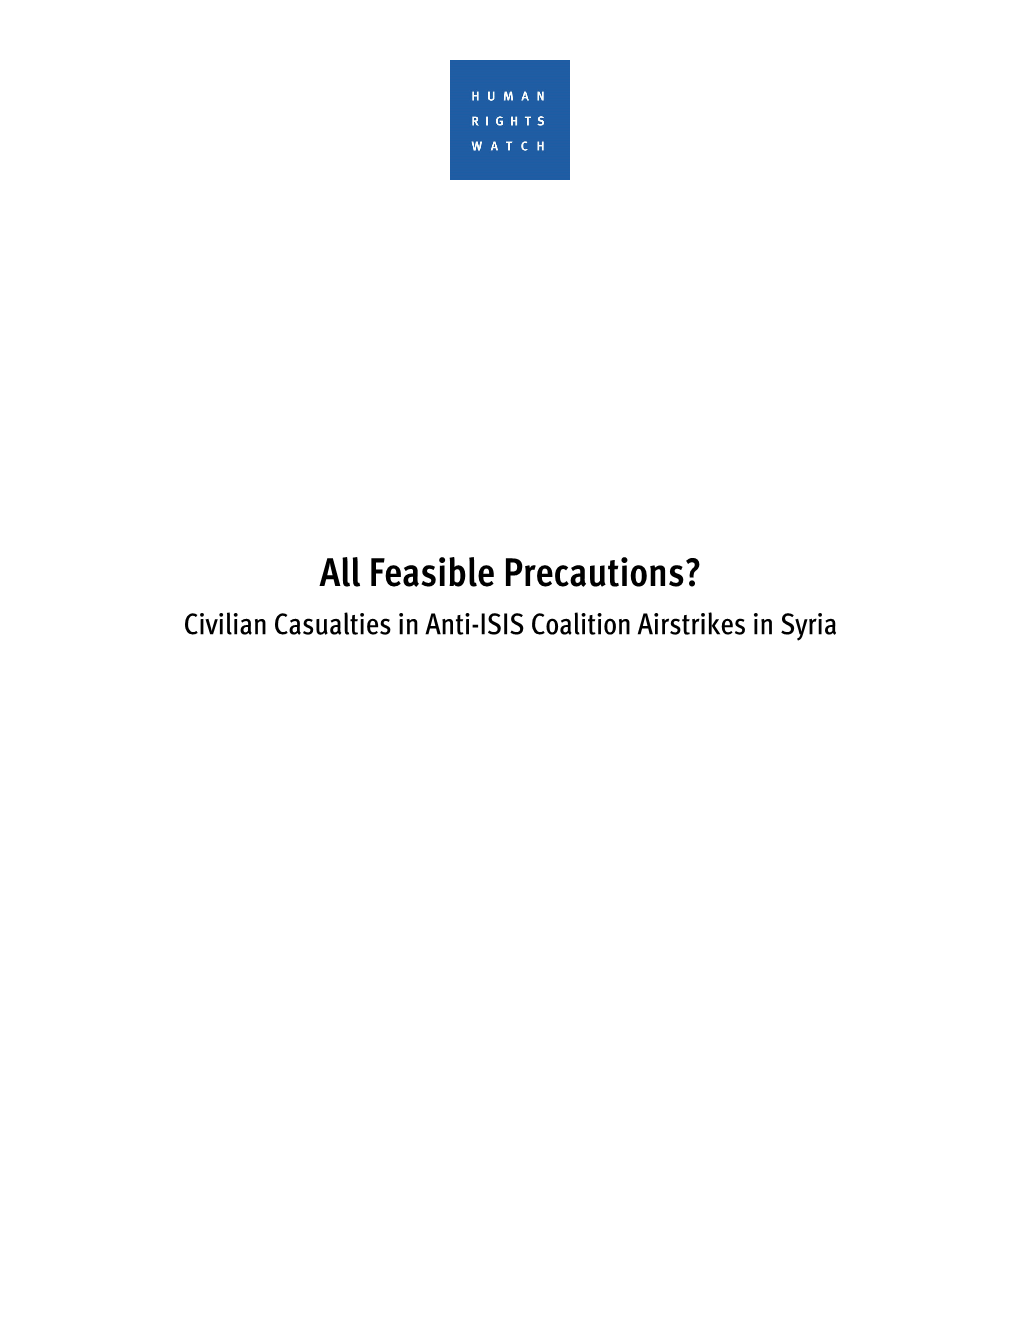 Feasible Precautions? Civilian Casualties in Anti-ISIS Coalition Airstrikes in Syria